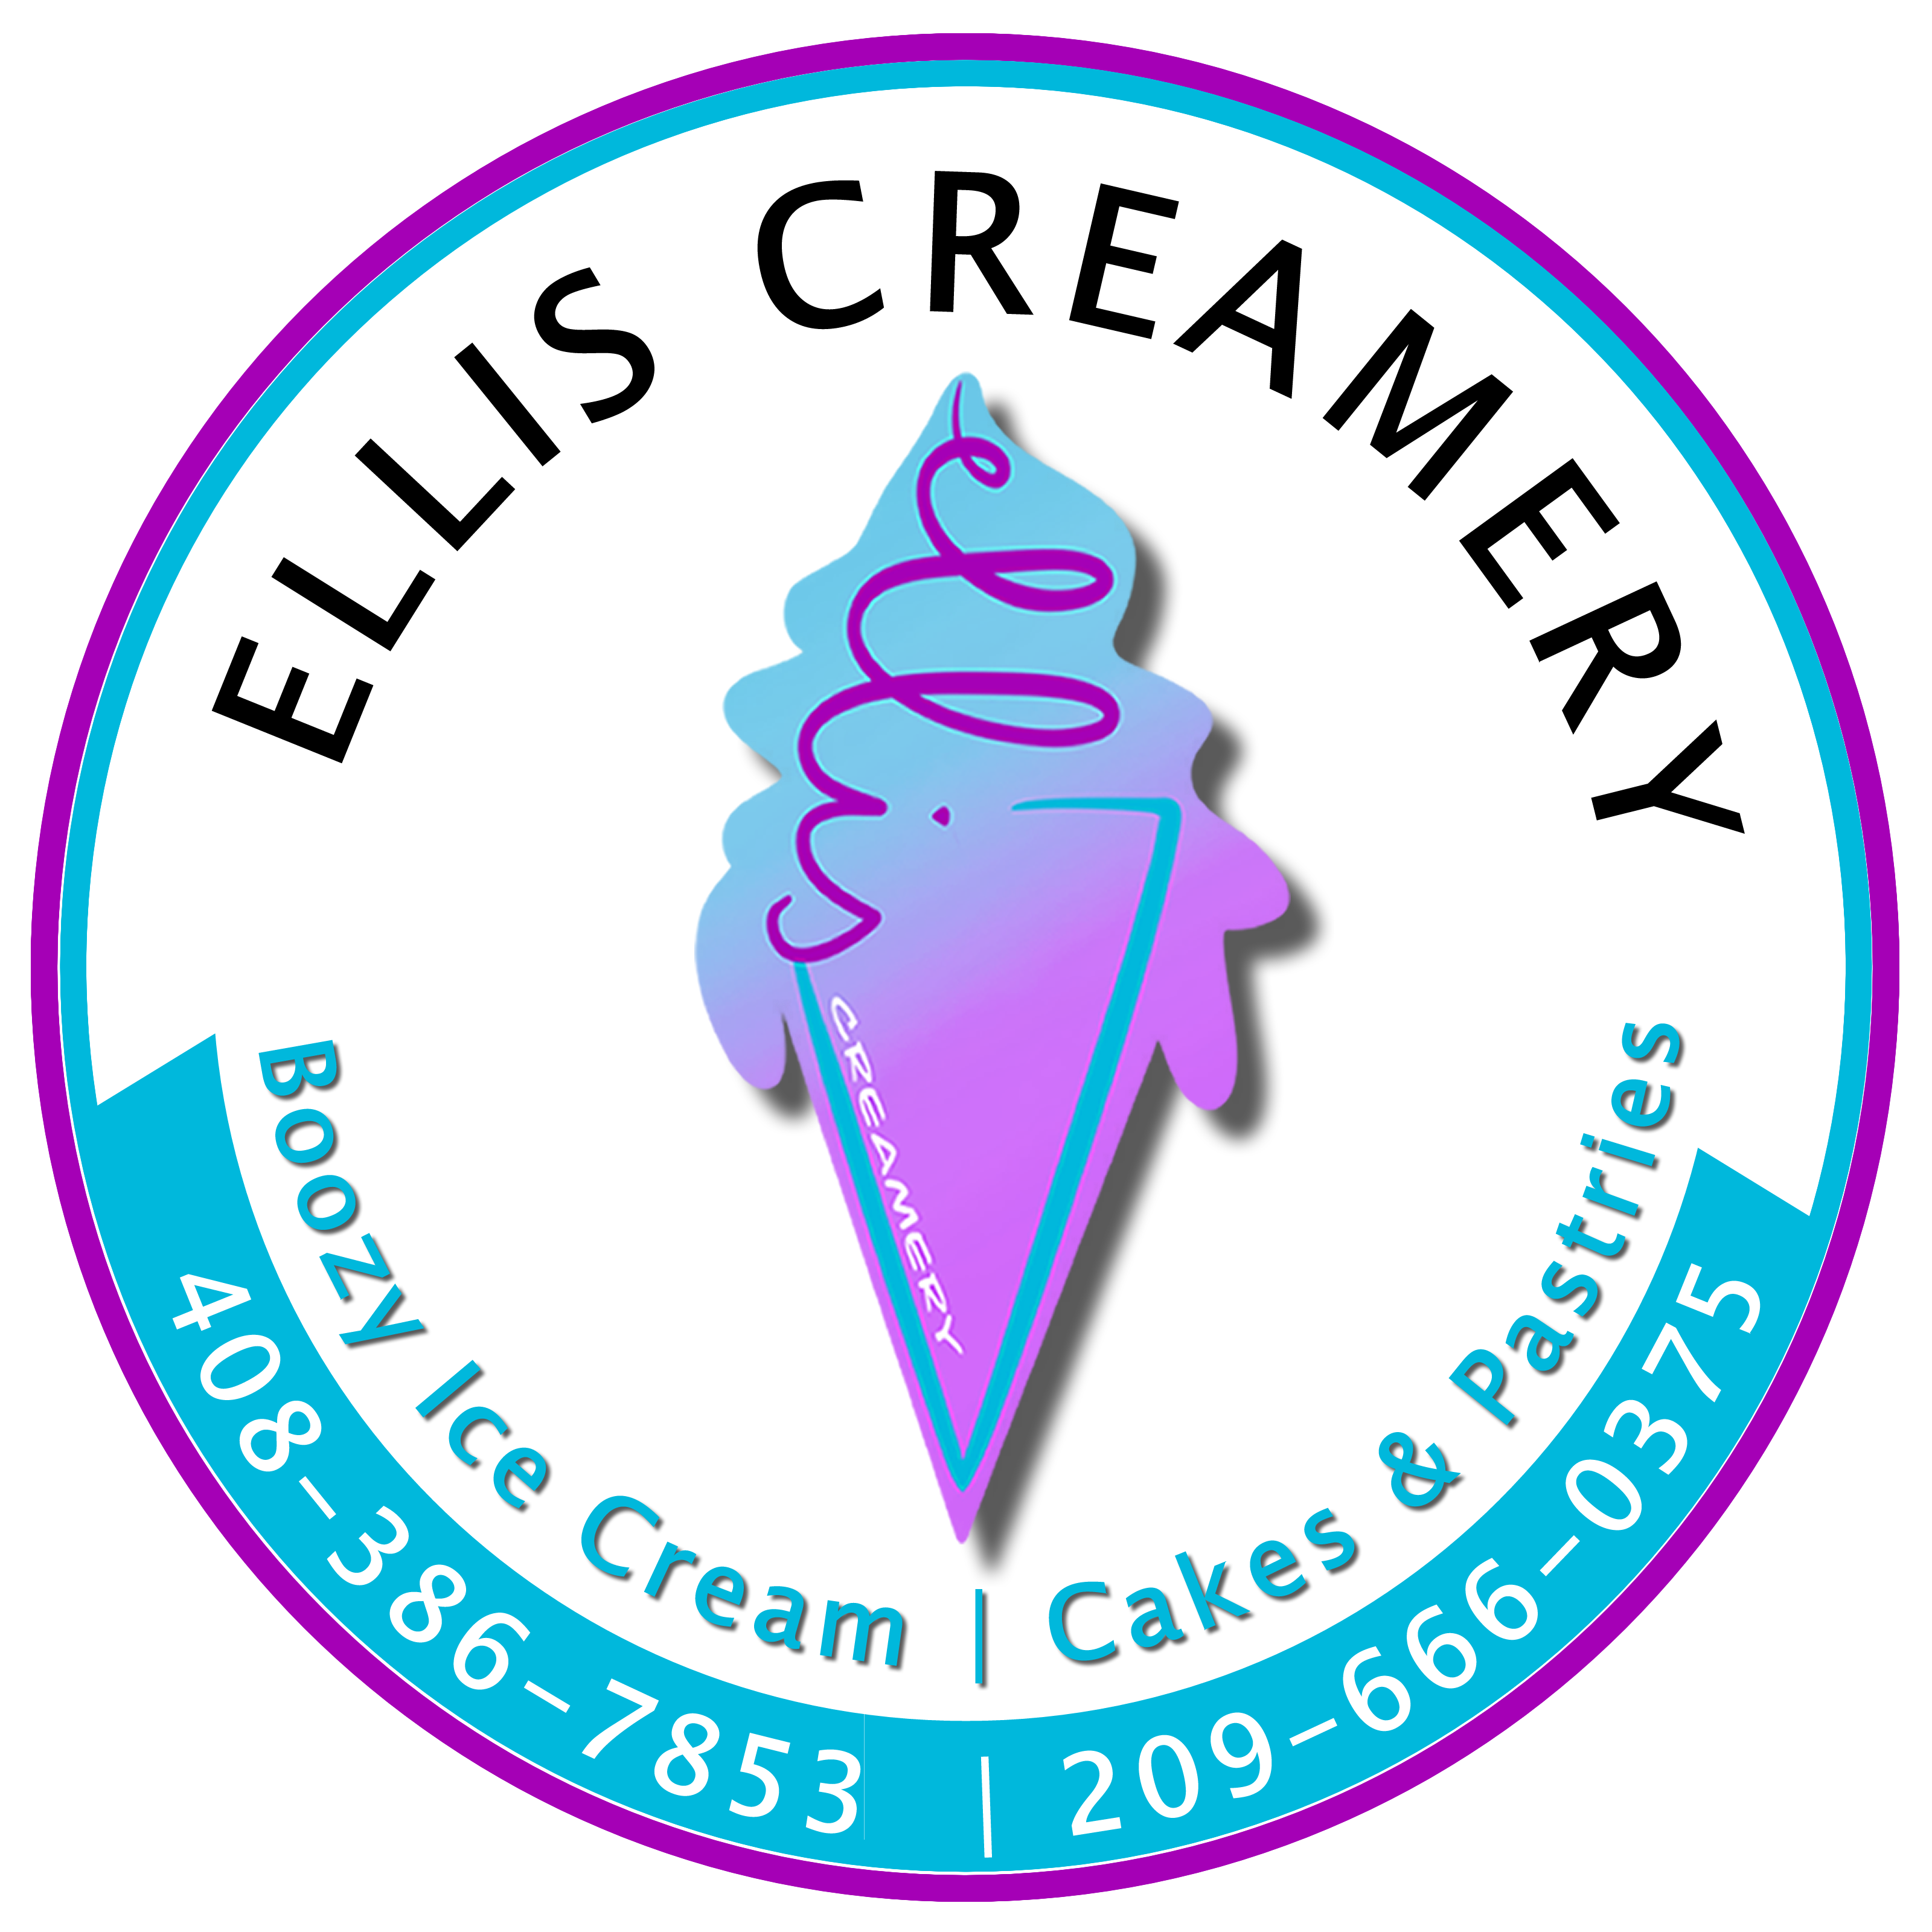 Ellis Creamery